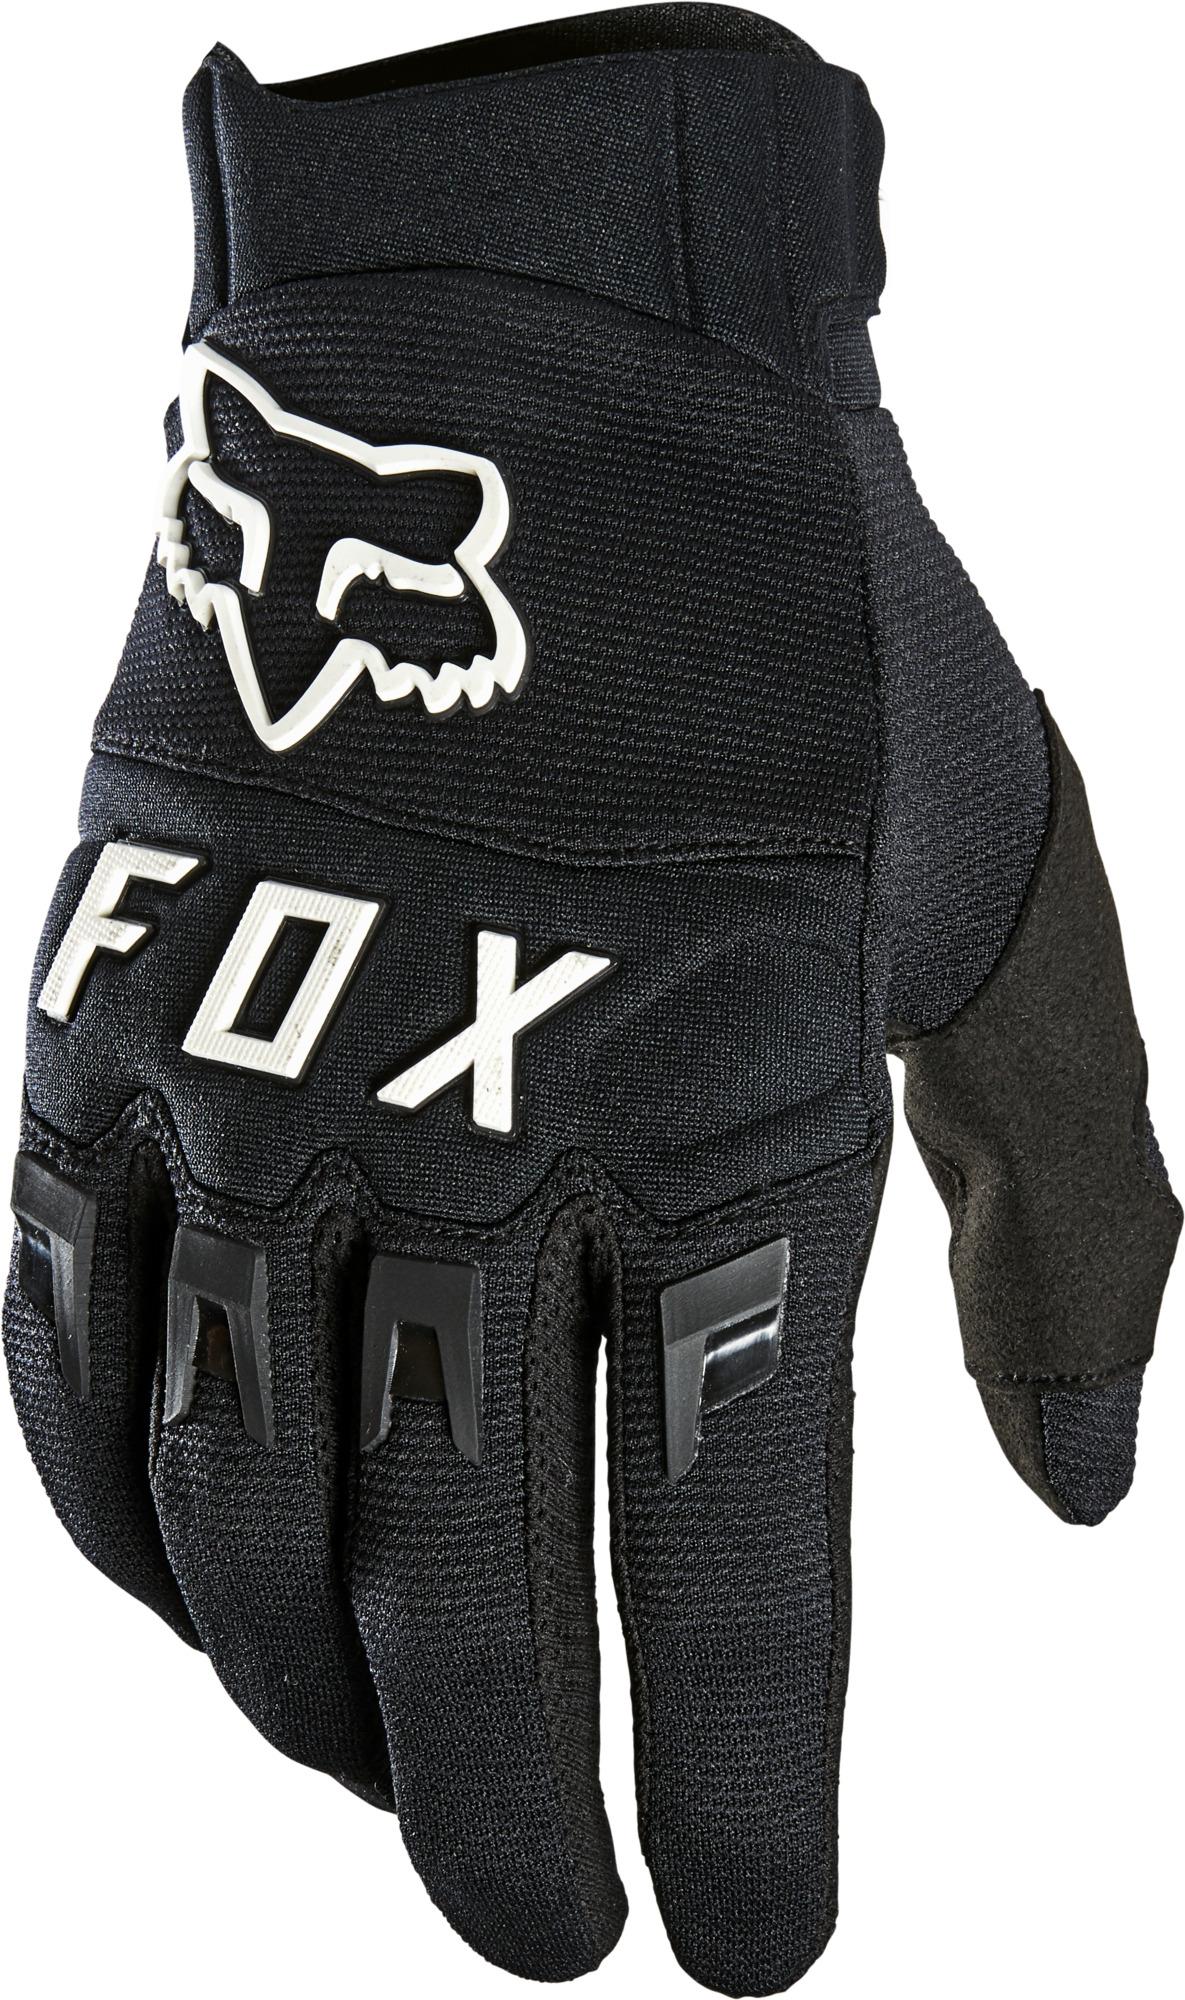 Fox Racing Dirtpaw Race Gloves - Black/white